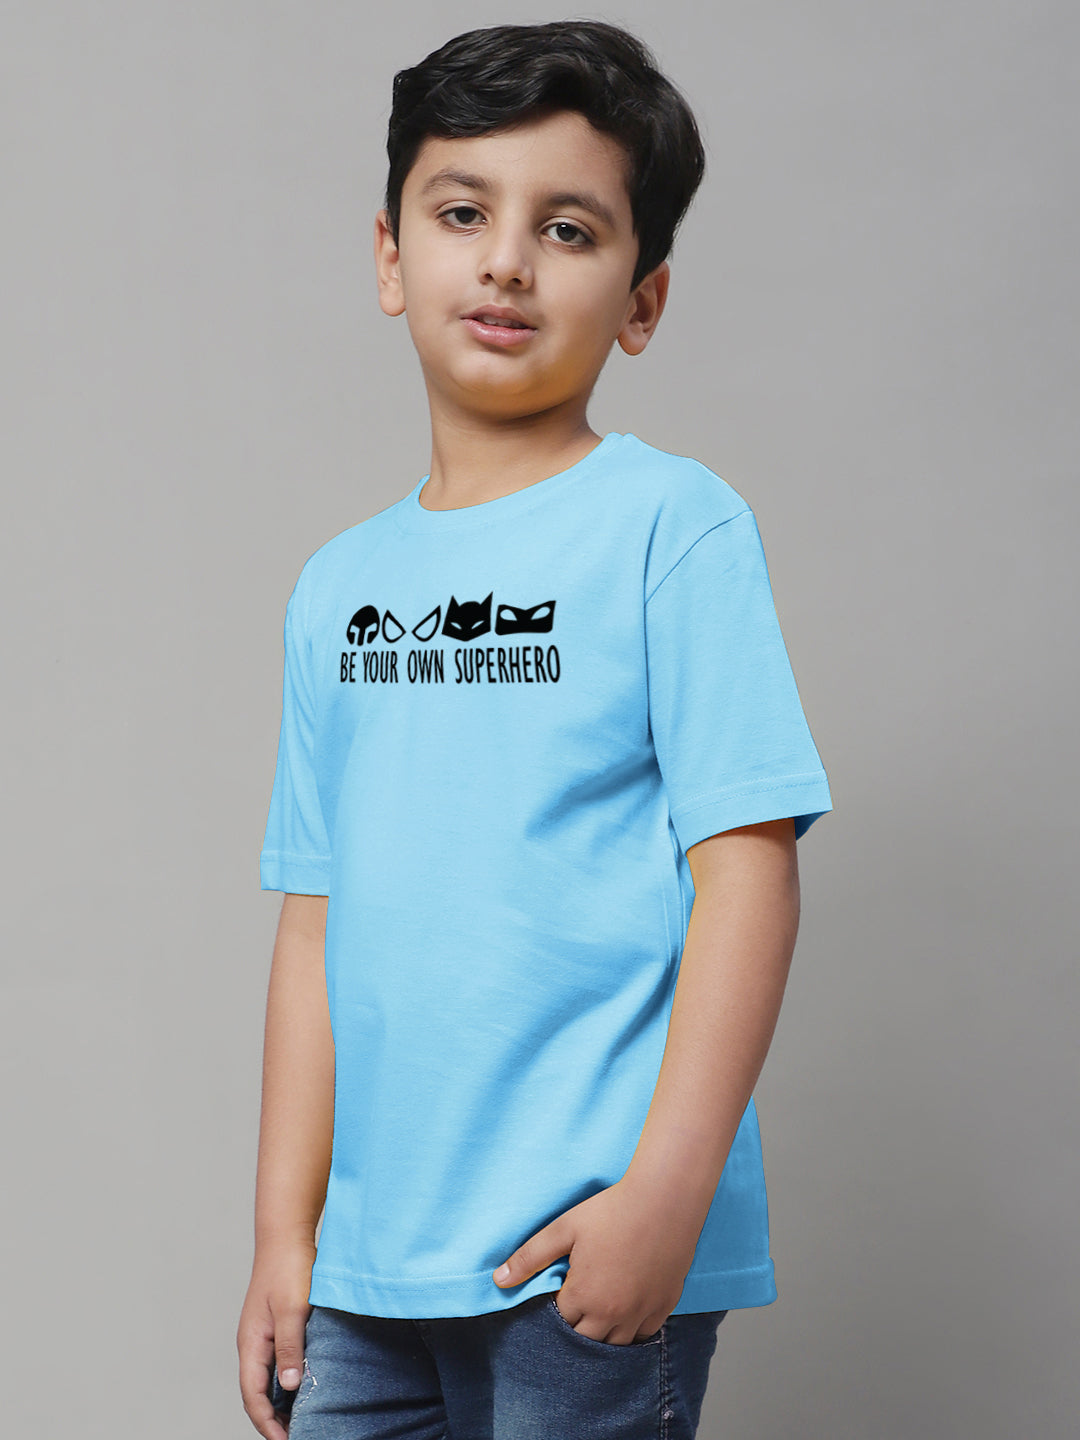 Boys Superhero Regular Fit Printed T-Shirt - Friskers